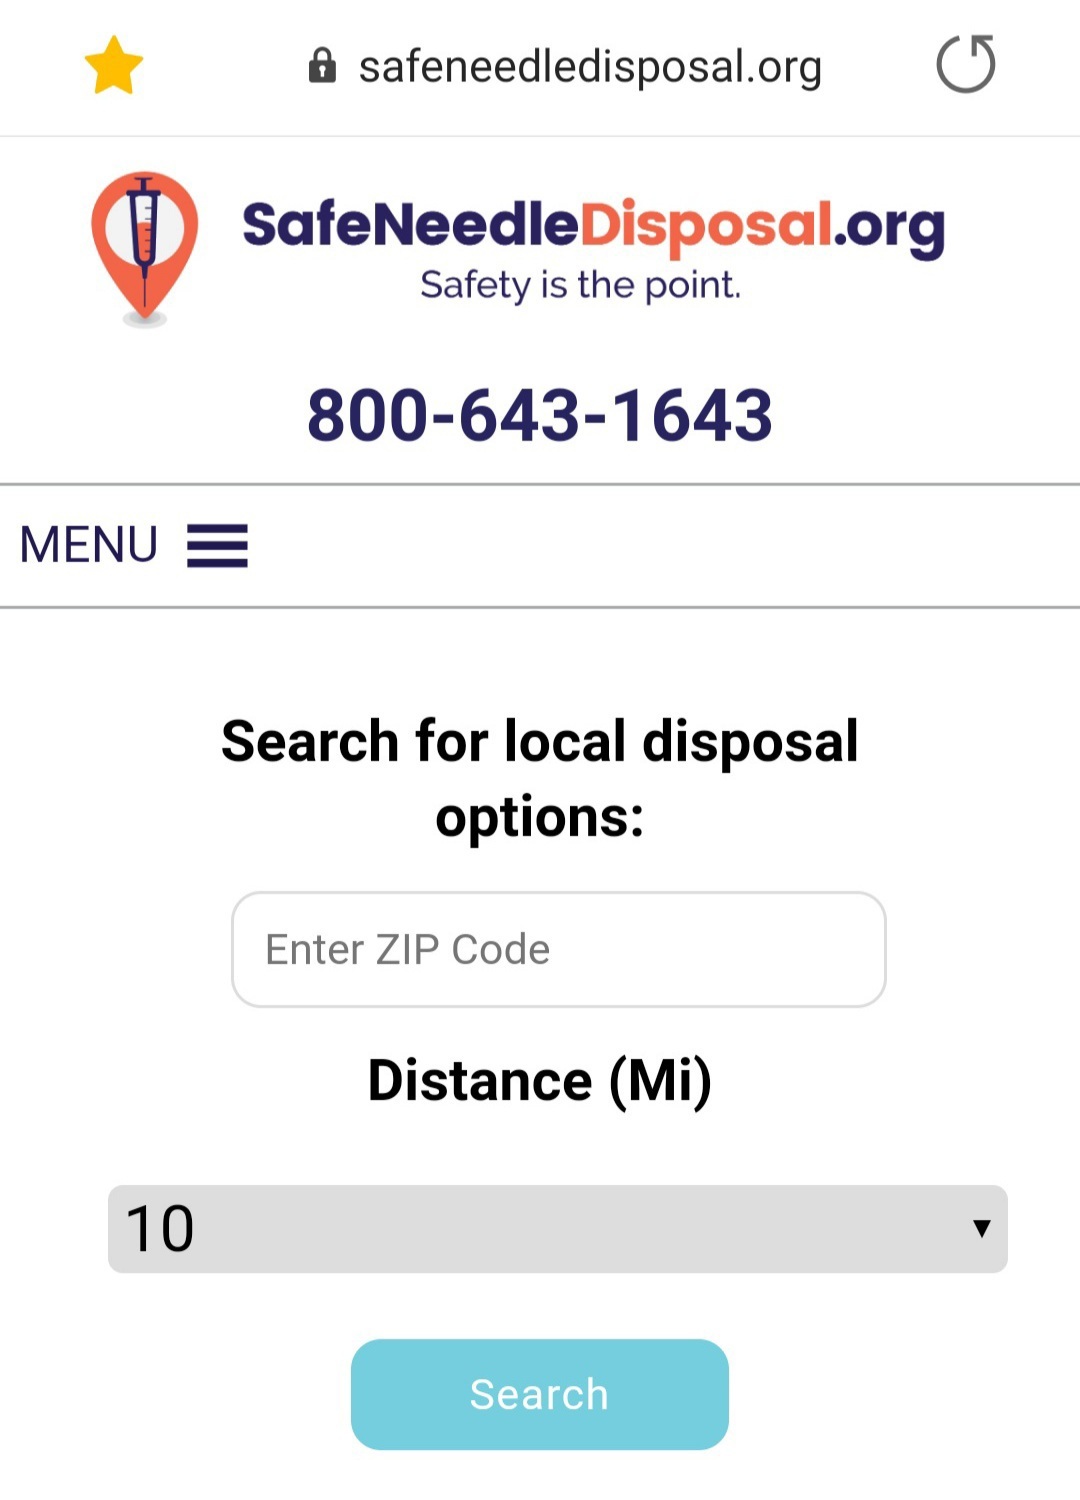 Safe_Needle_Disposal_Org8co2y.jpg